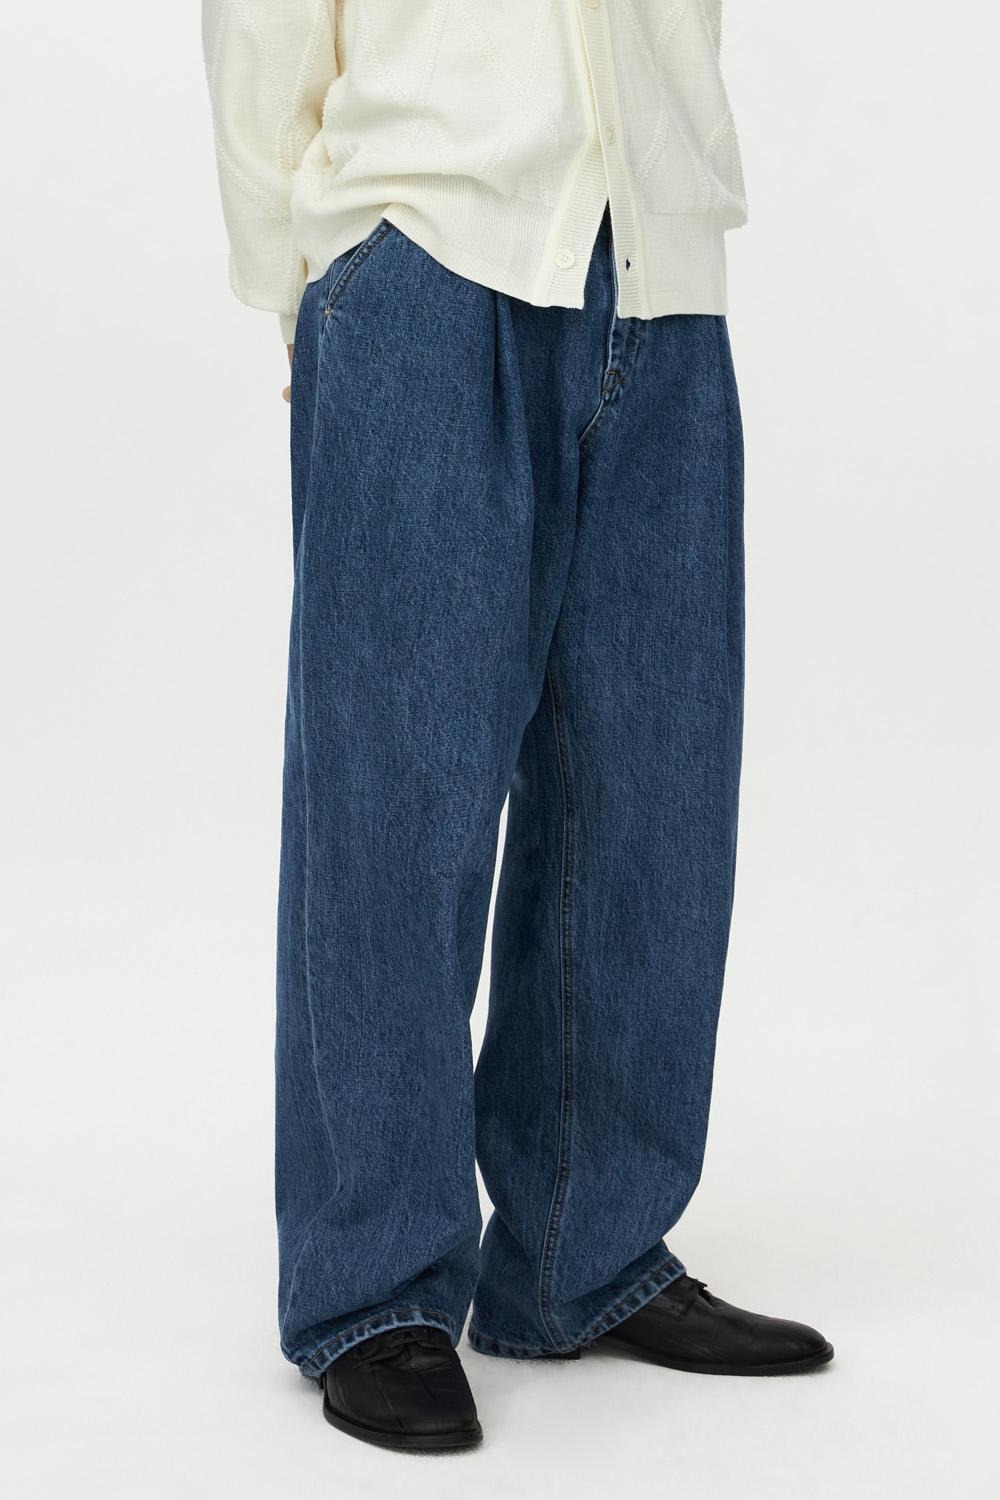 Structured Wide Denim Pants (Long)